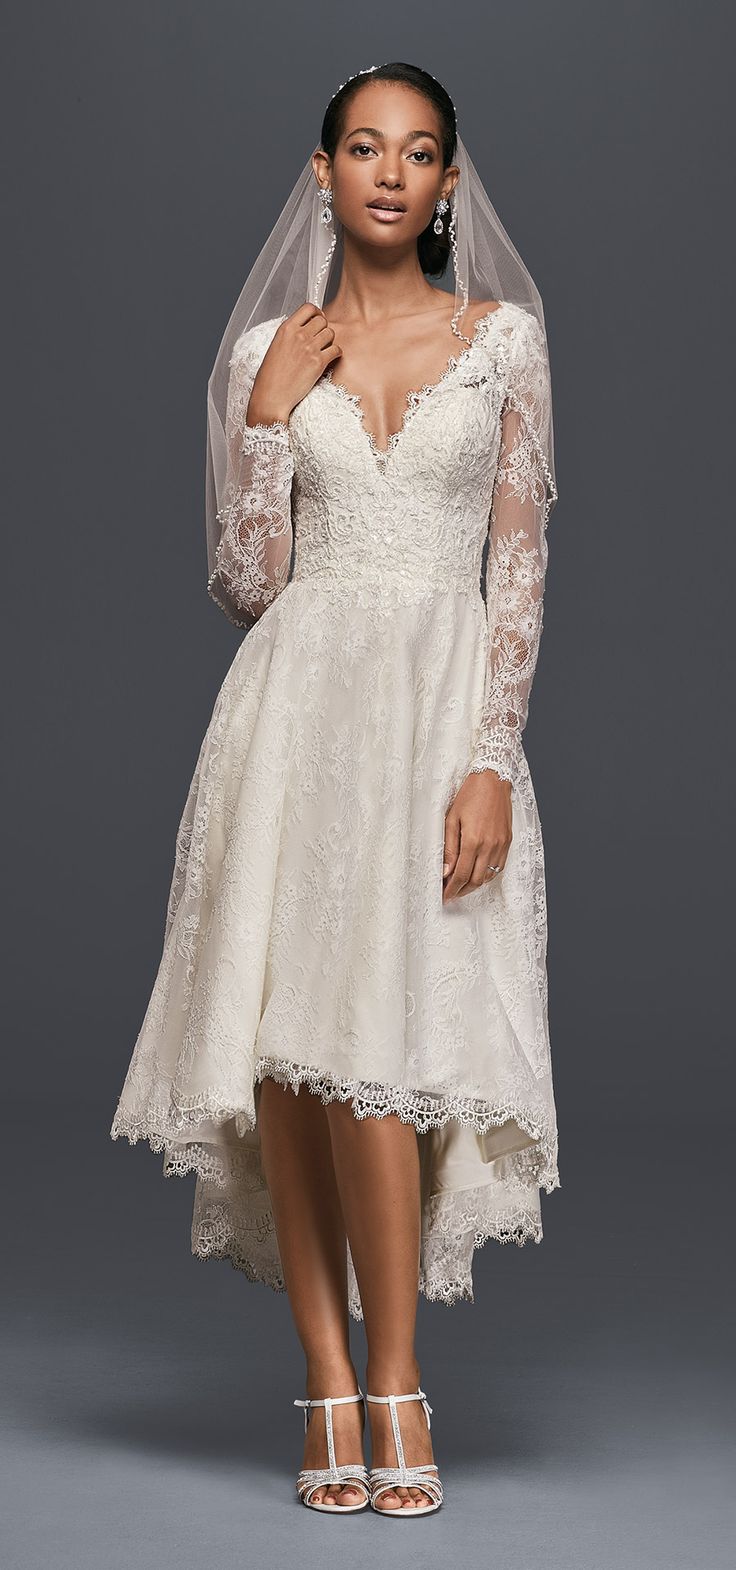 david's bridal tea length wedding dress